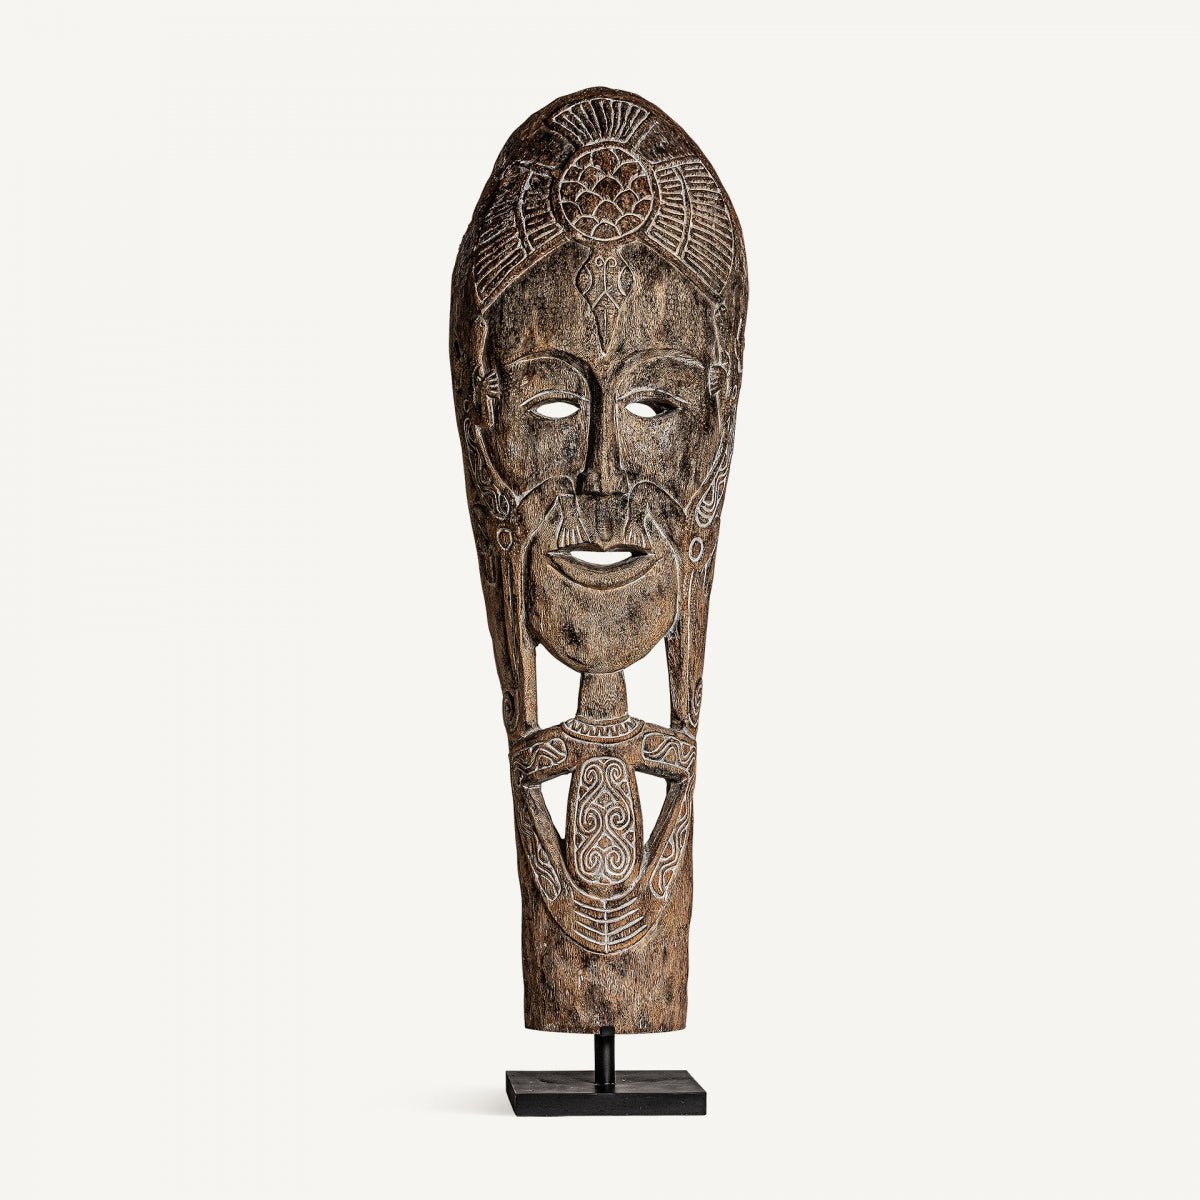 Floor sculpture: Width: Height: 200cm 57cm, Depth: 40cm, made of palm wood